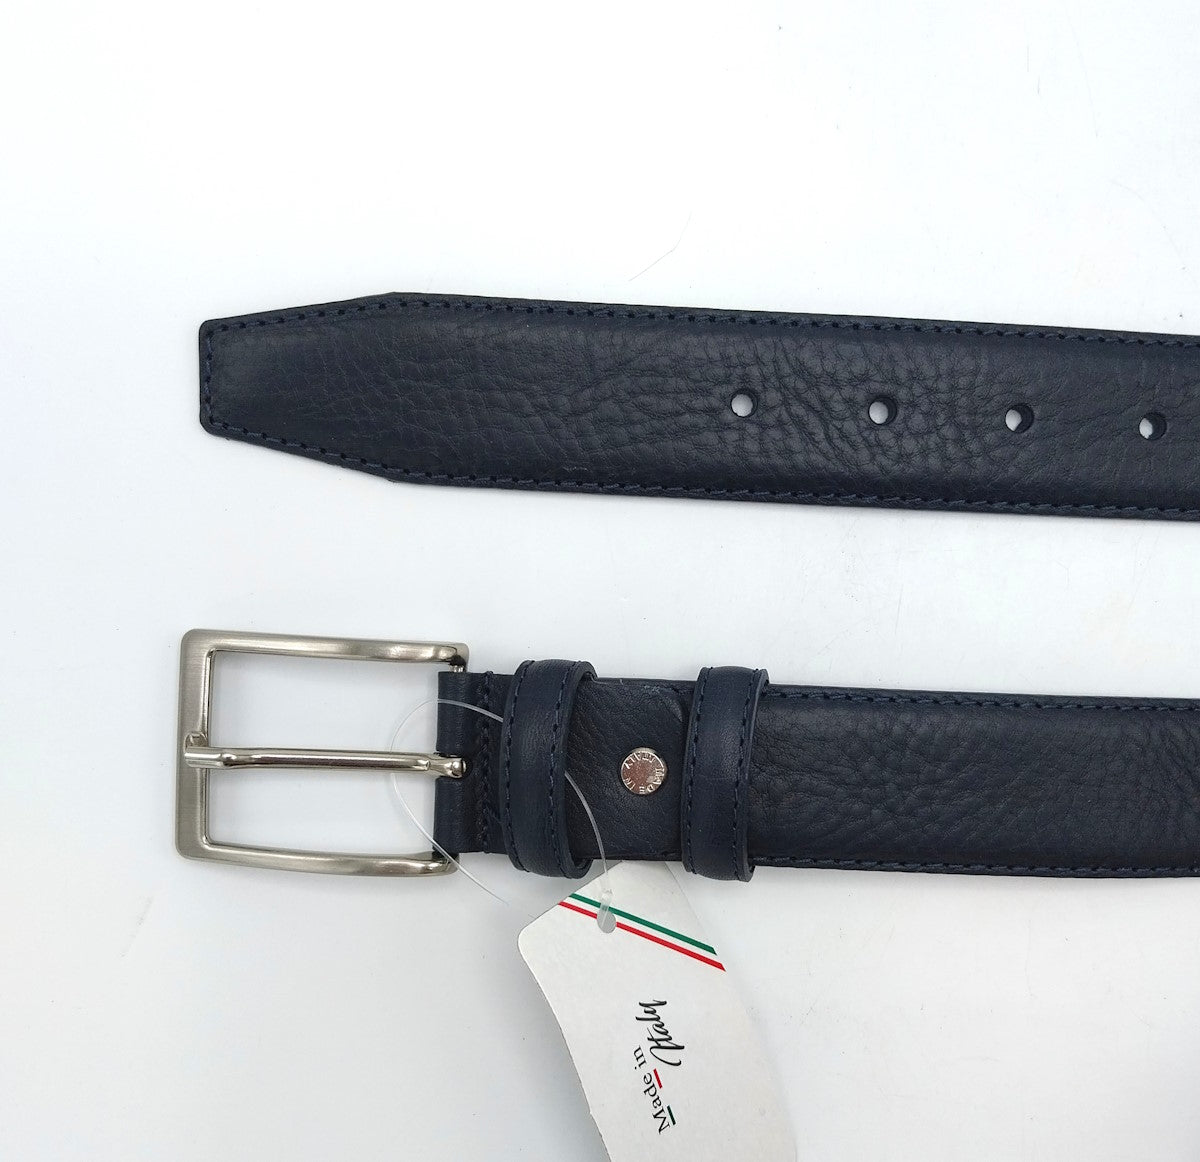 Genuine leather belt for men, Made in Italy, Juice, art. JU035-1